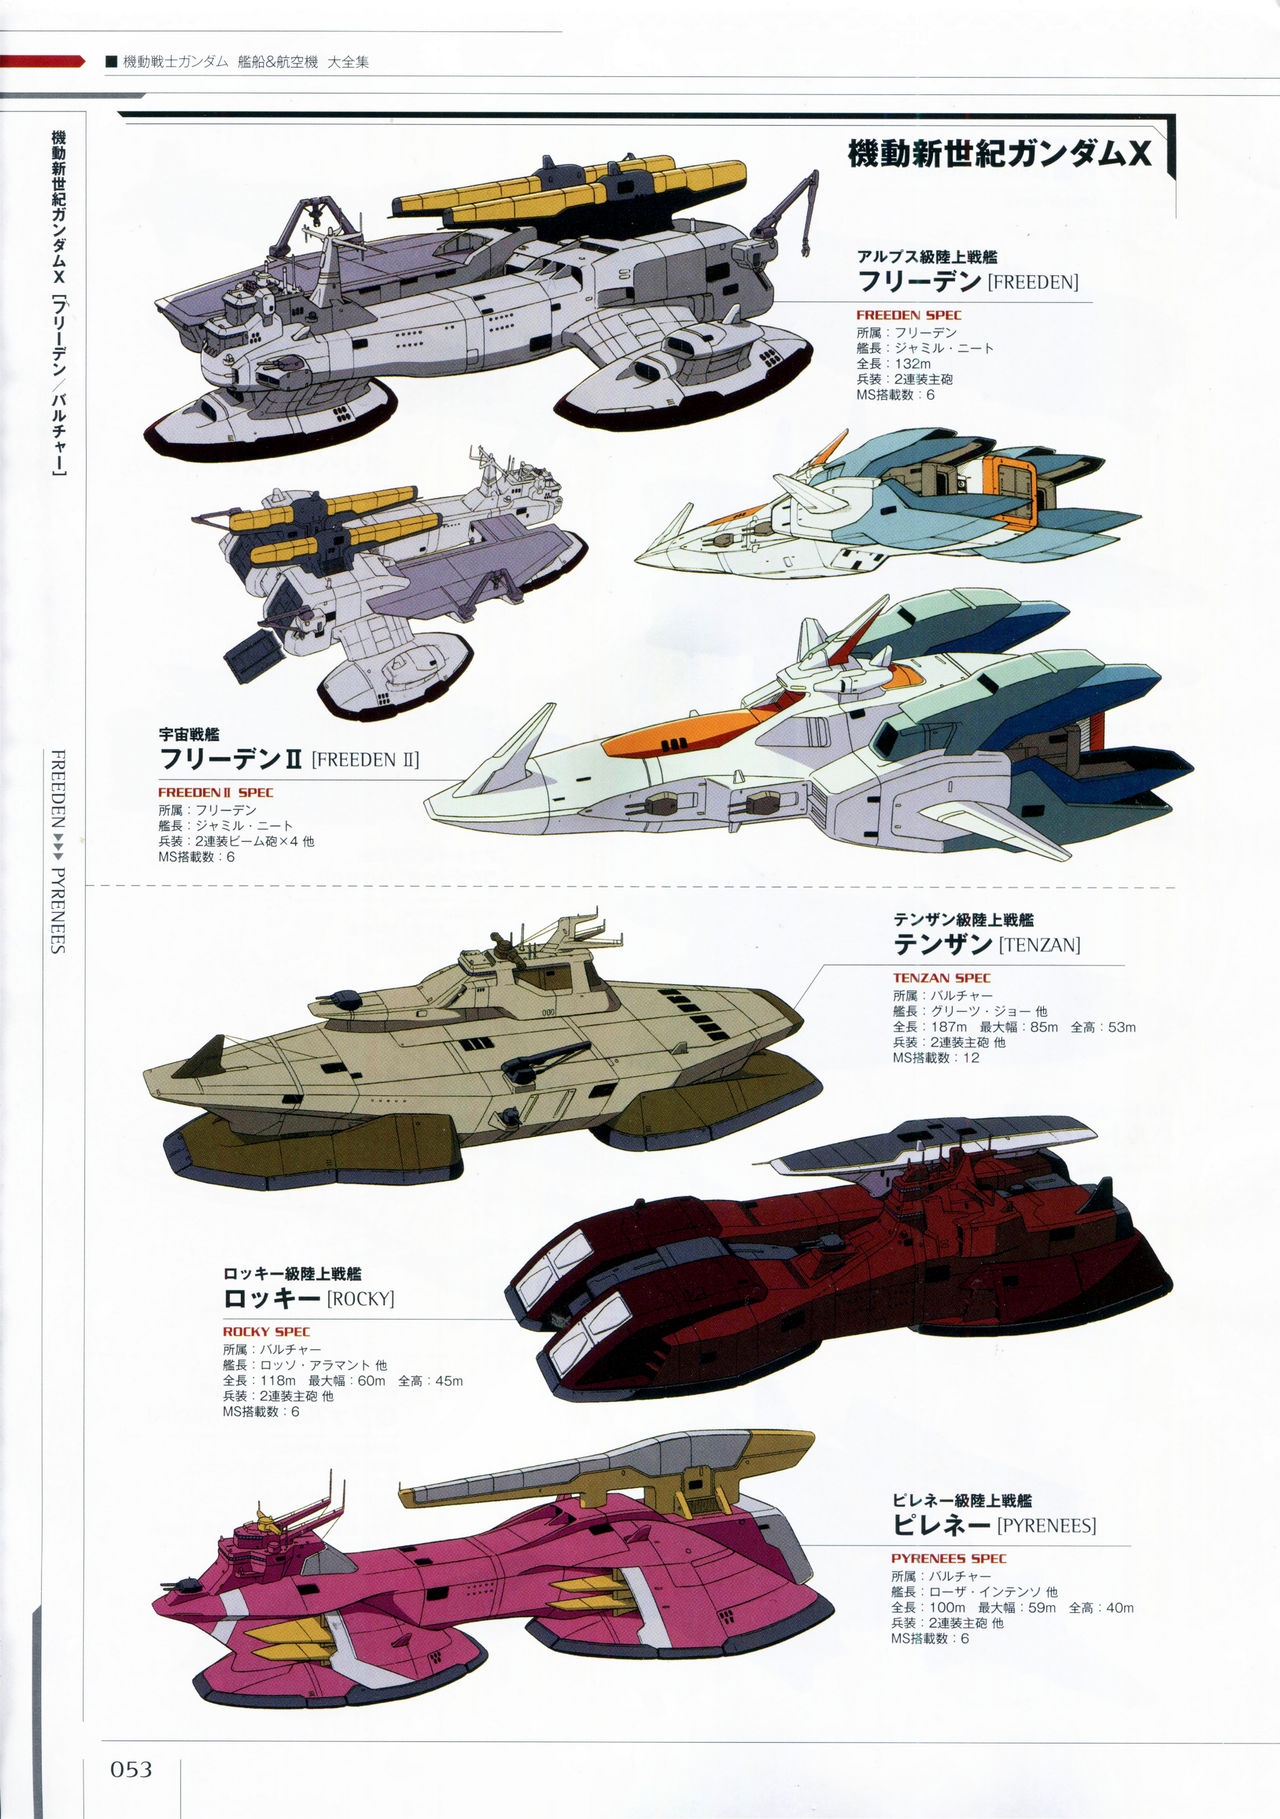 Mobile Suit Gundam - Ship & Aerospace Plane Encyclopedia - Revised Edition 58